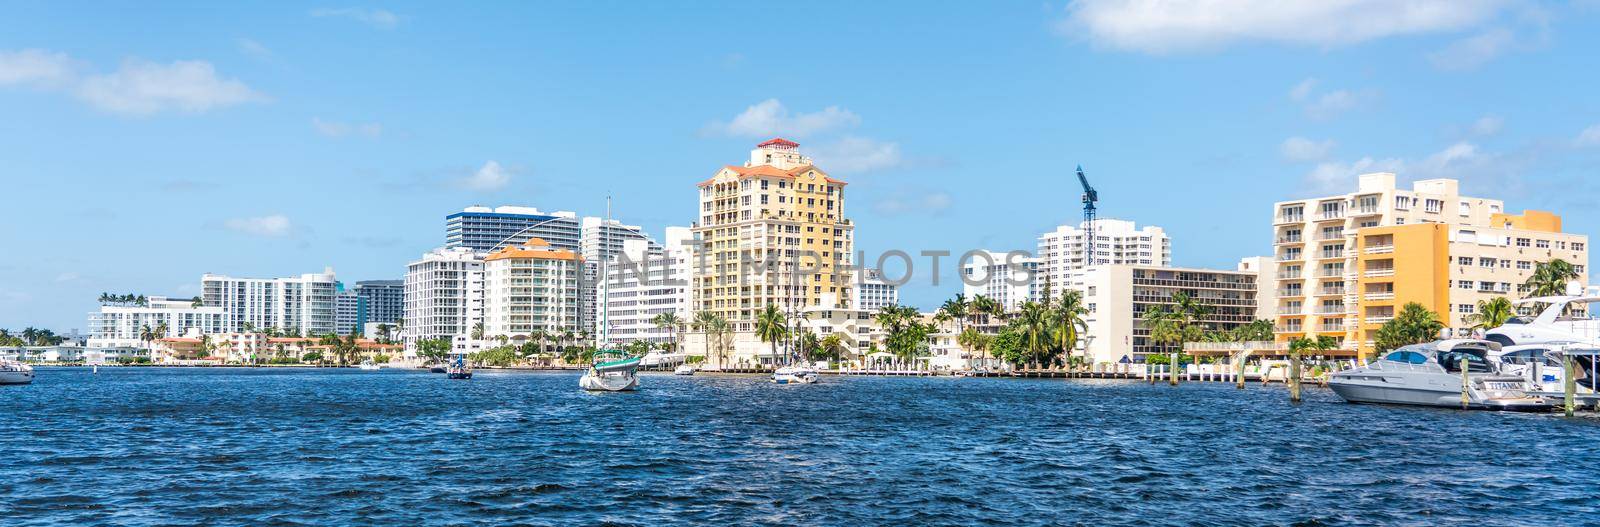 FORT LAUDERDALE, FLORIDA - September 20, 2019: Panorama of skyline of Fort Lauderdale